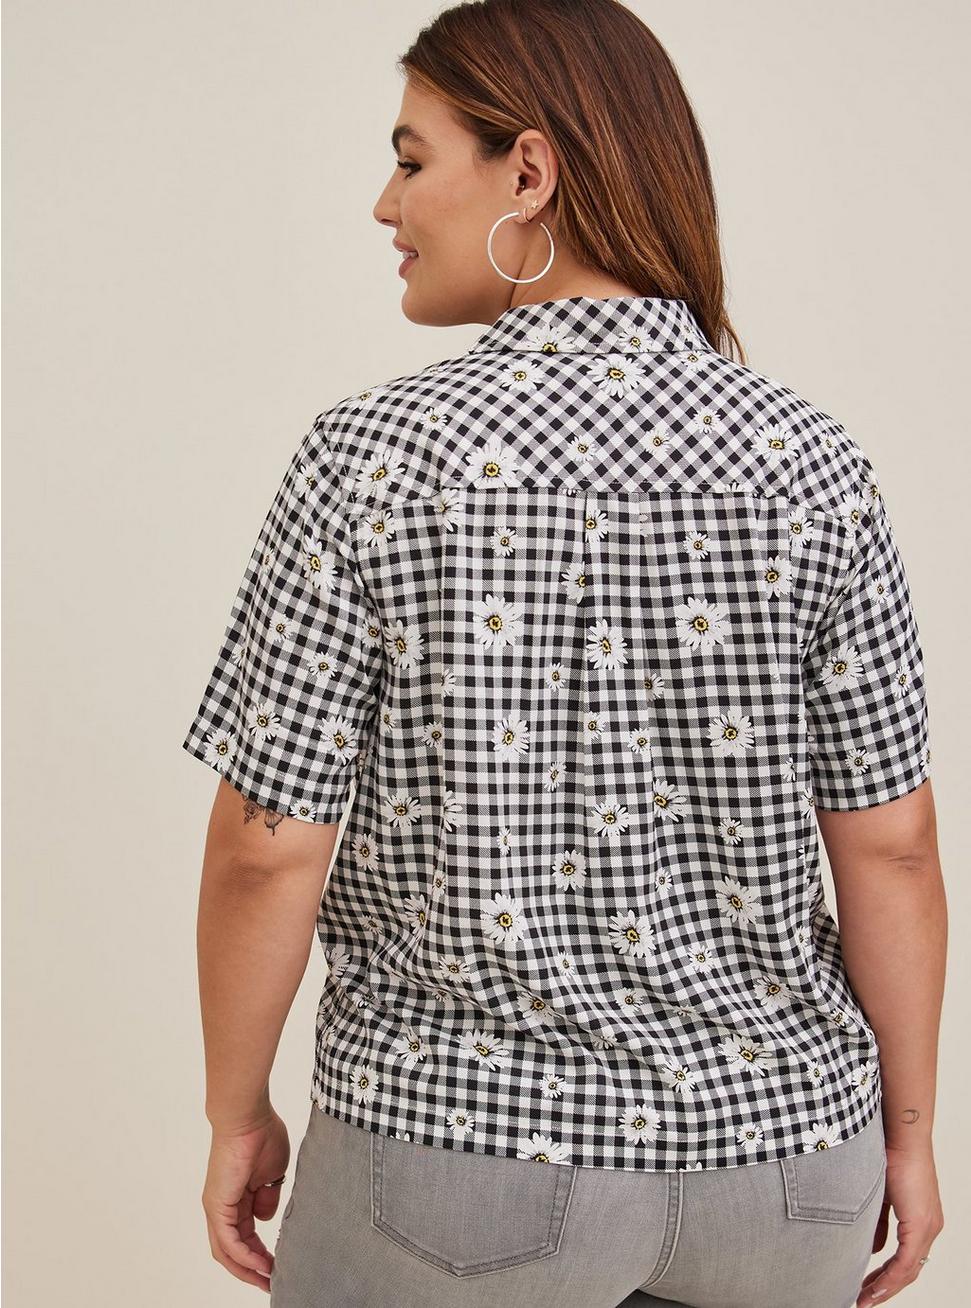 Lizzie Rayon Twill Button-Down Short Sleeve Shirt, PLAID MULTI, alternate